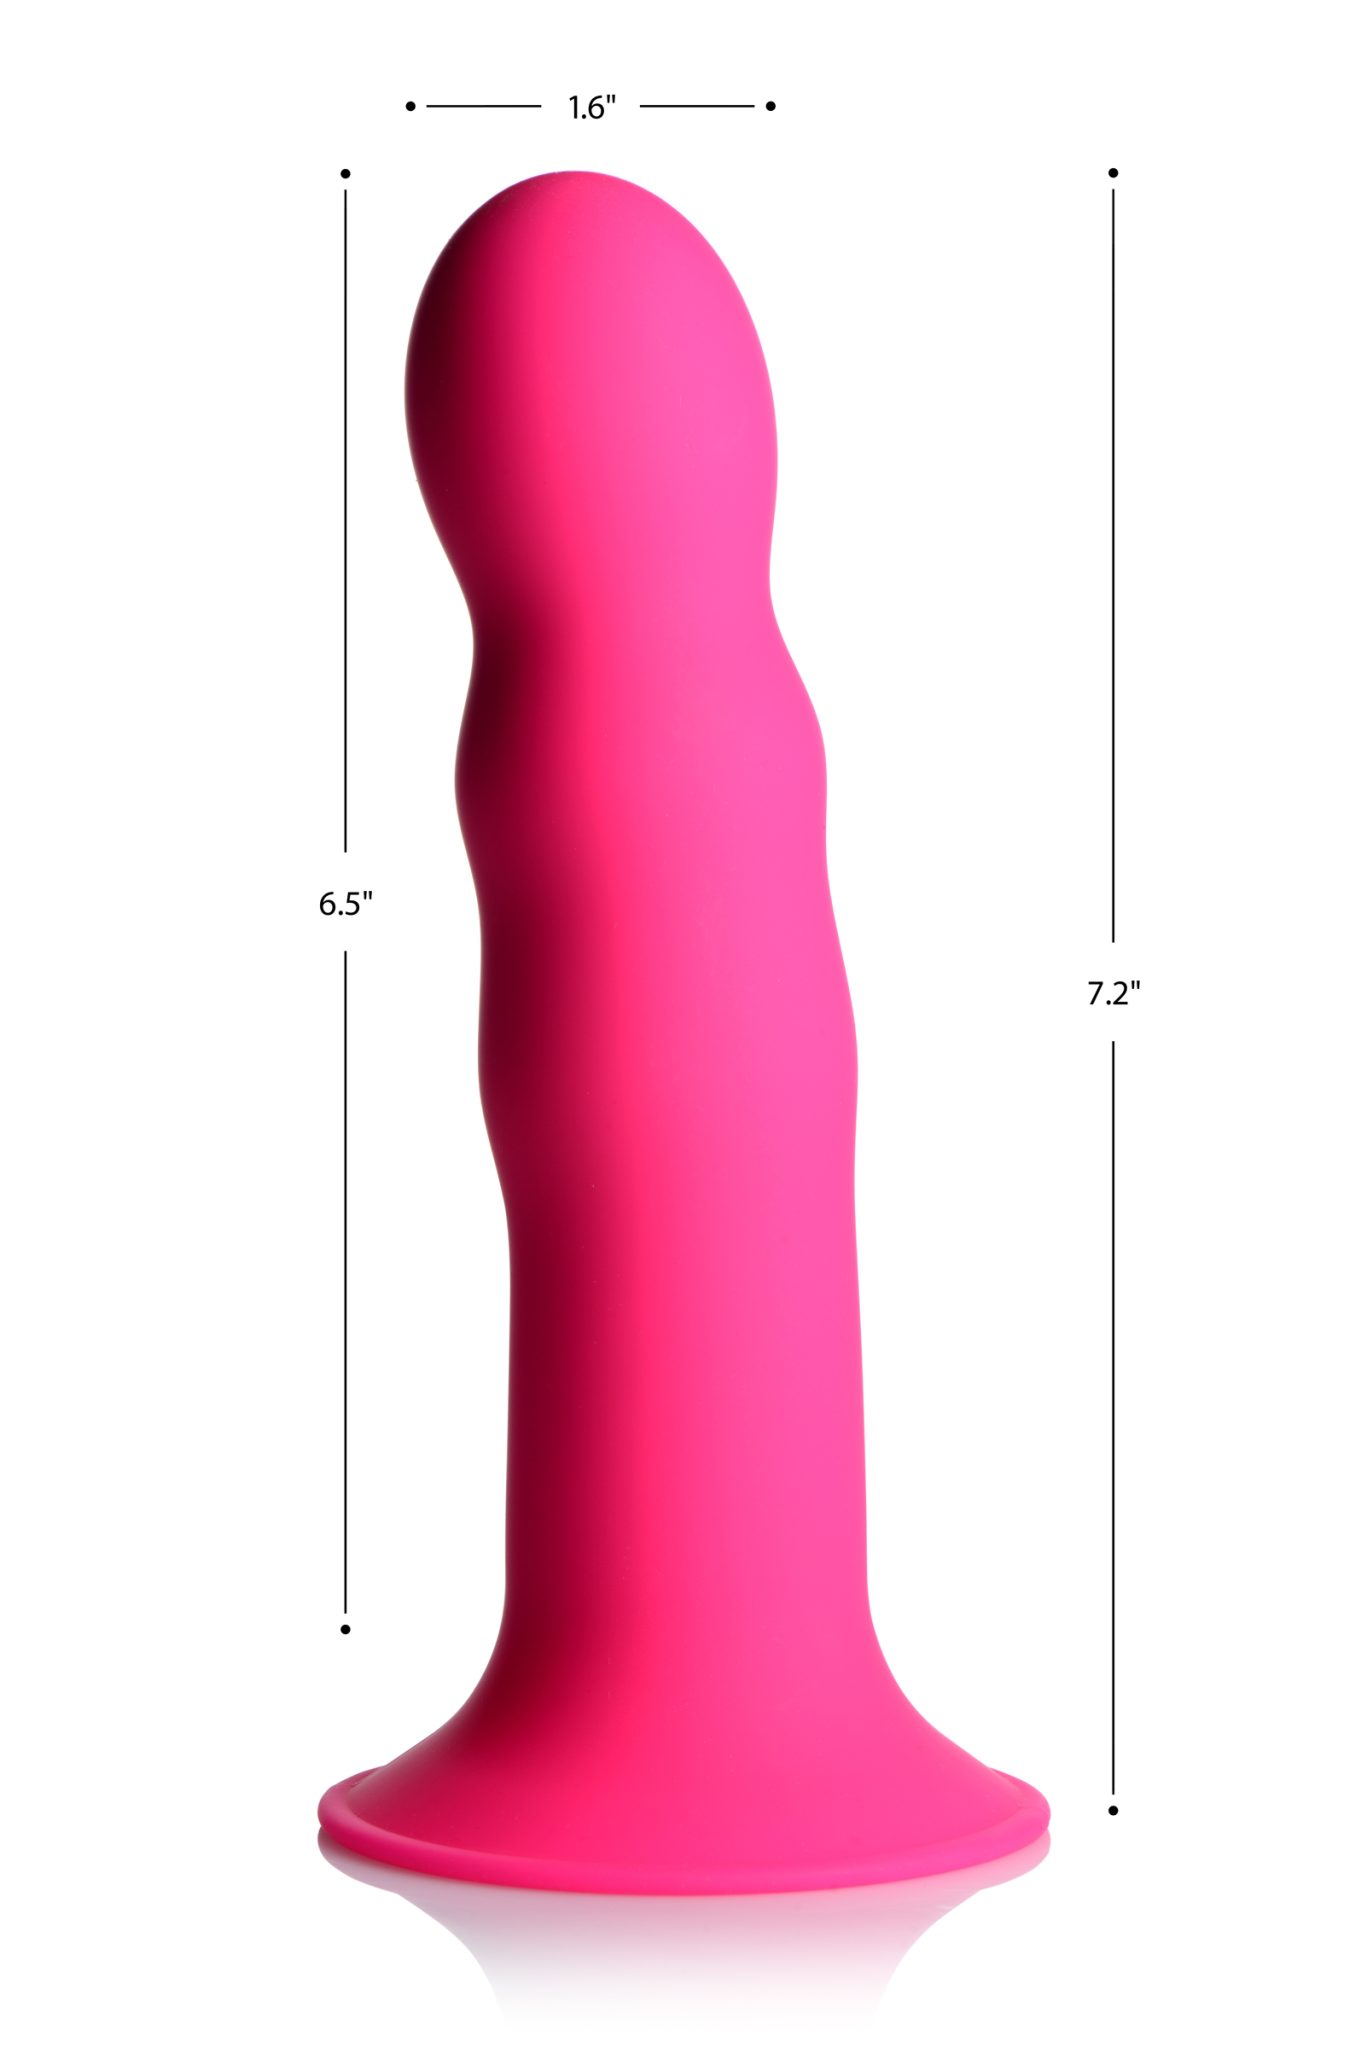 Squeezable Wavy Dildo – Pink